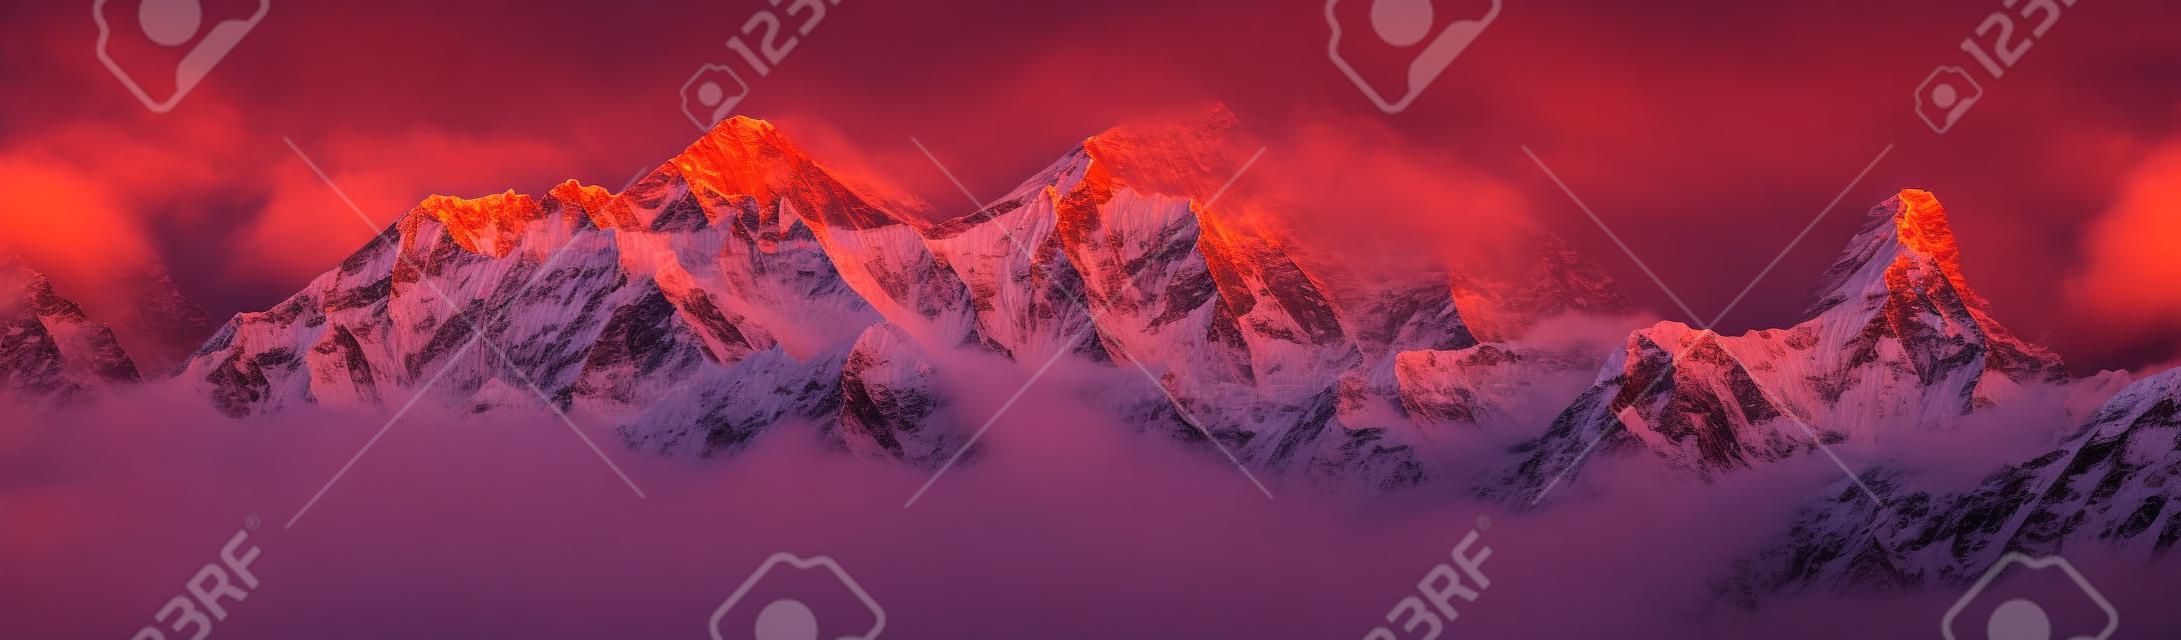 Evening sunset red colored view of mount Everest, Lhotse and Ama Dablam from Kongde village, Khumbu valley, Solukhumbu, Nepal Himalayas mountains